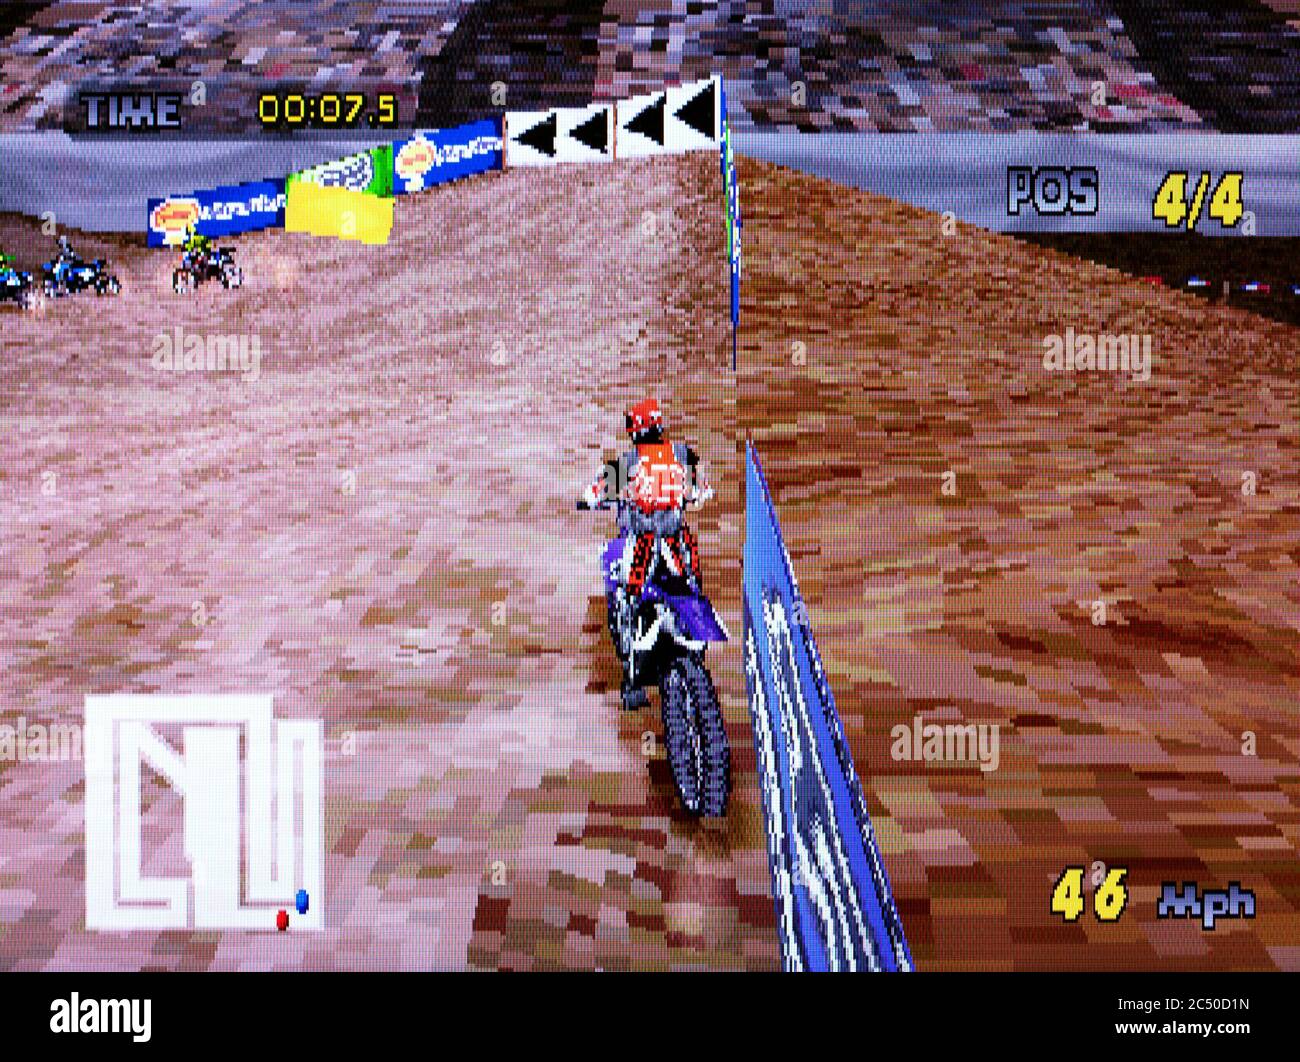 Motocross Mania - Sony PlayStation 1 PS1 PSX - usage éditorial uniquement Banque D'Images